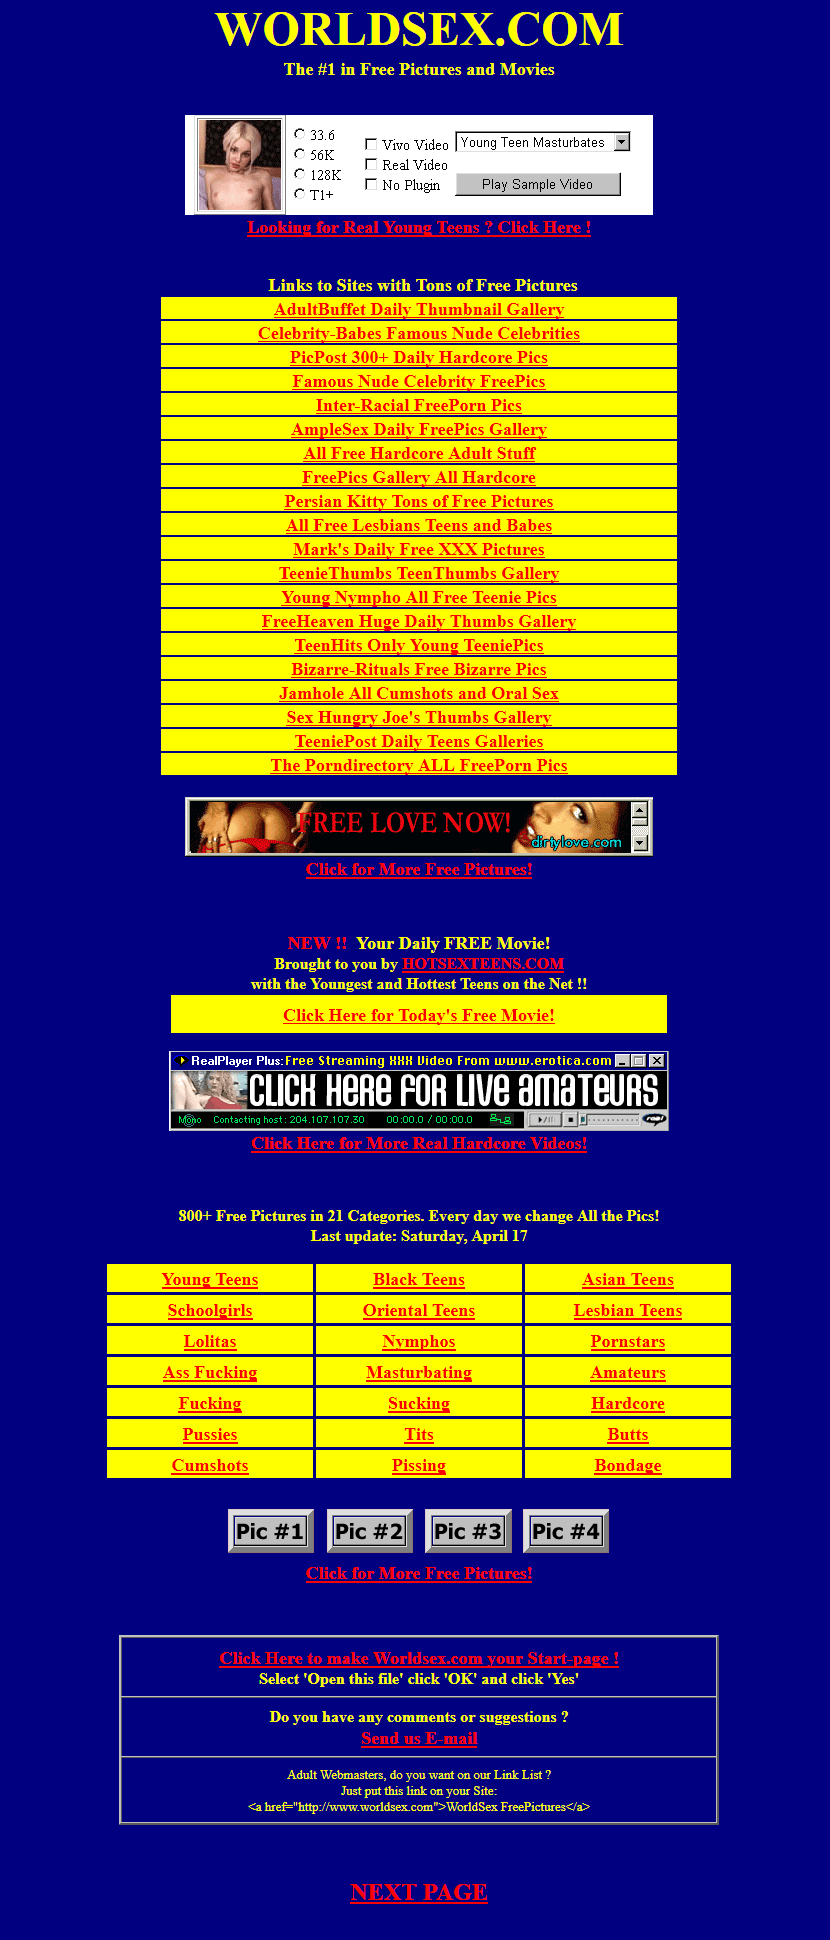 Worldsex.com in 1999